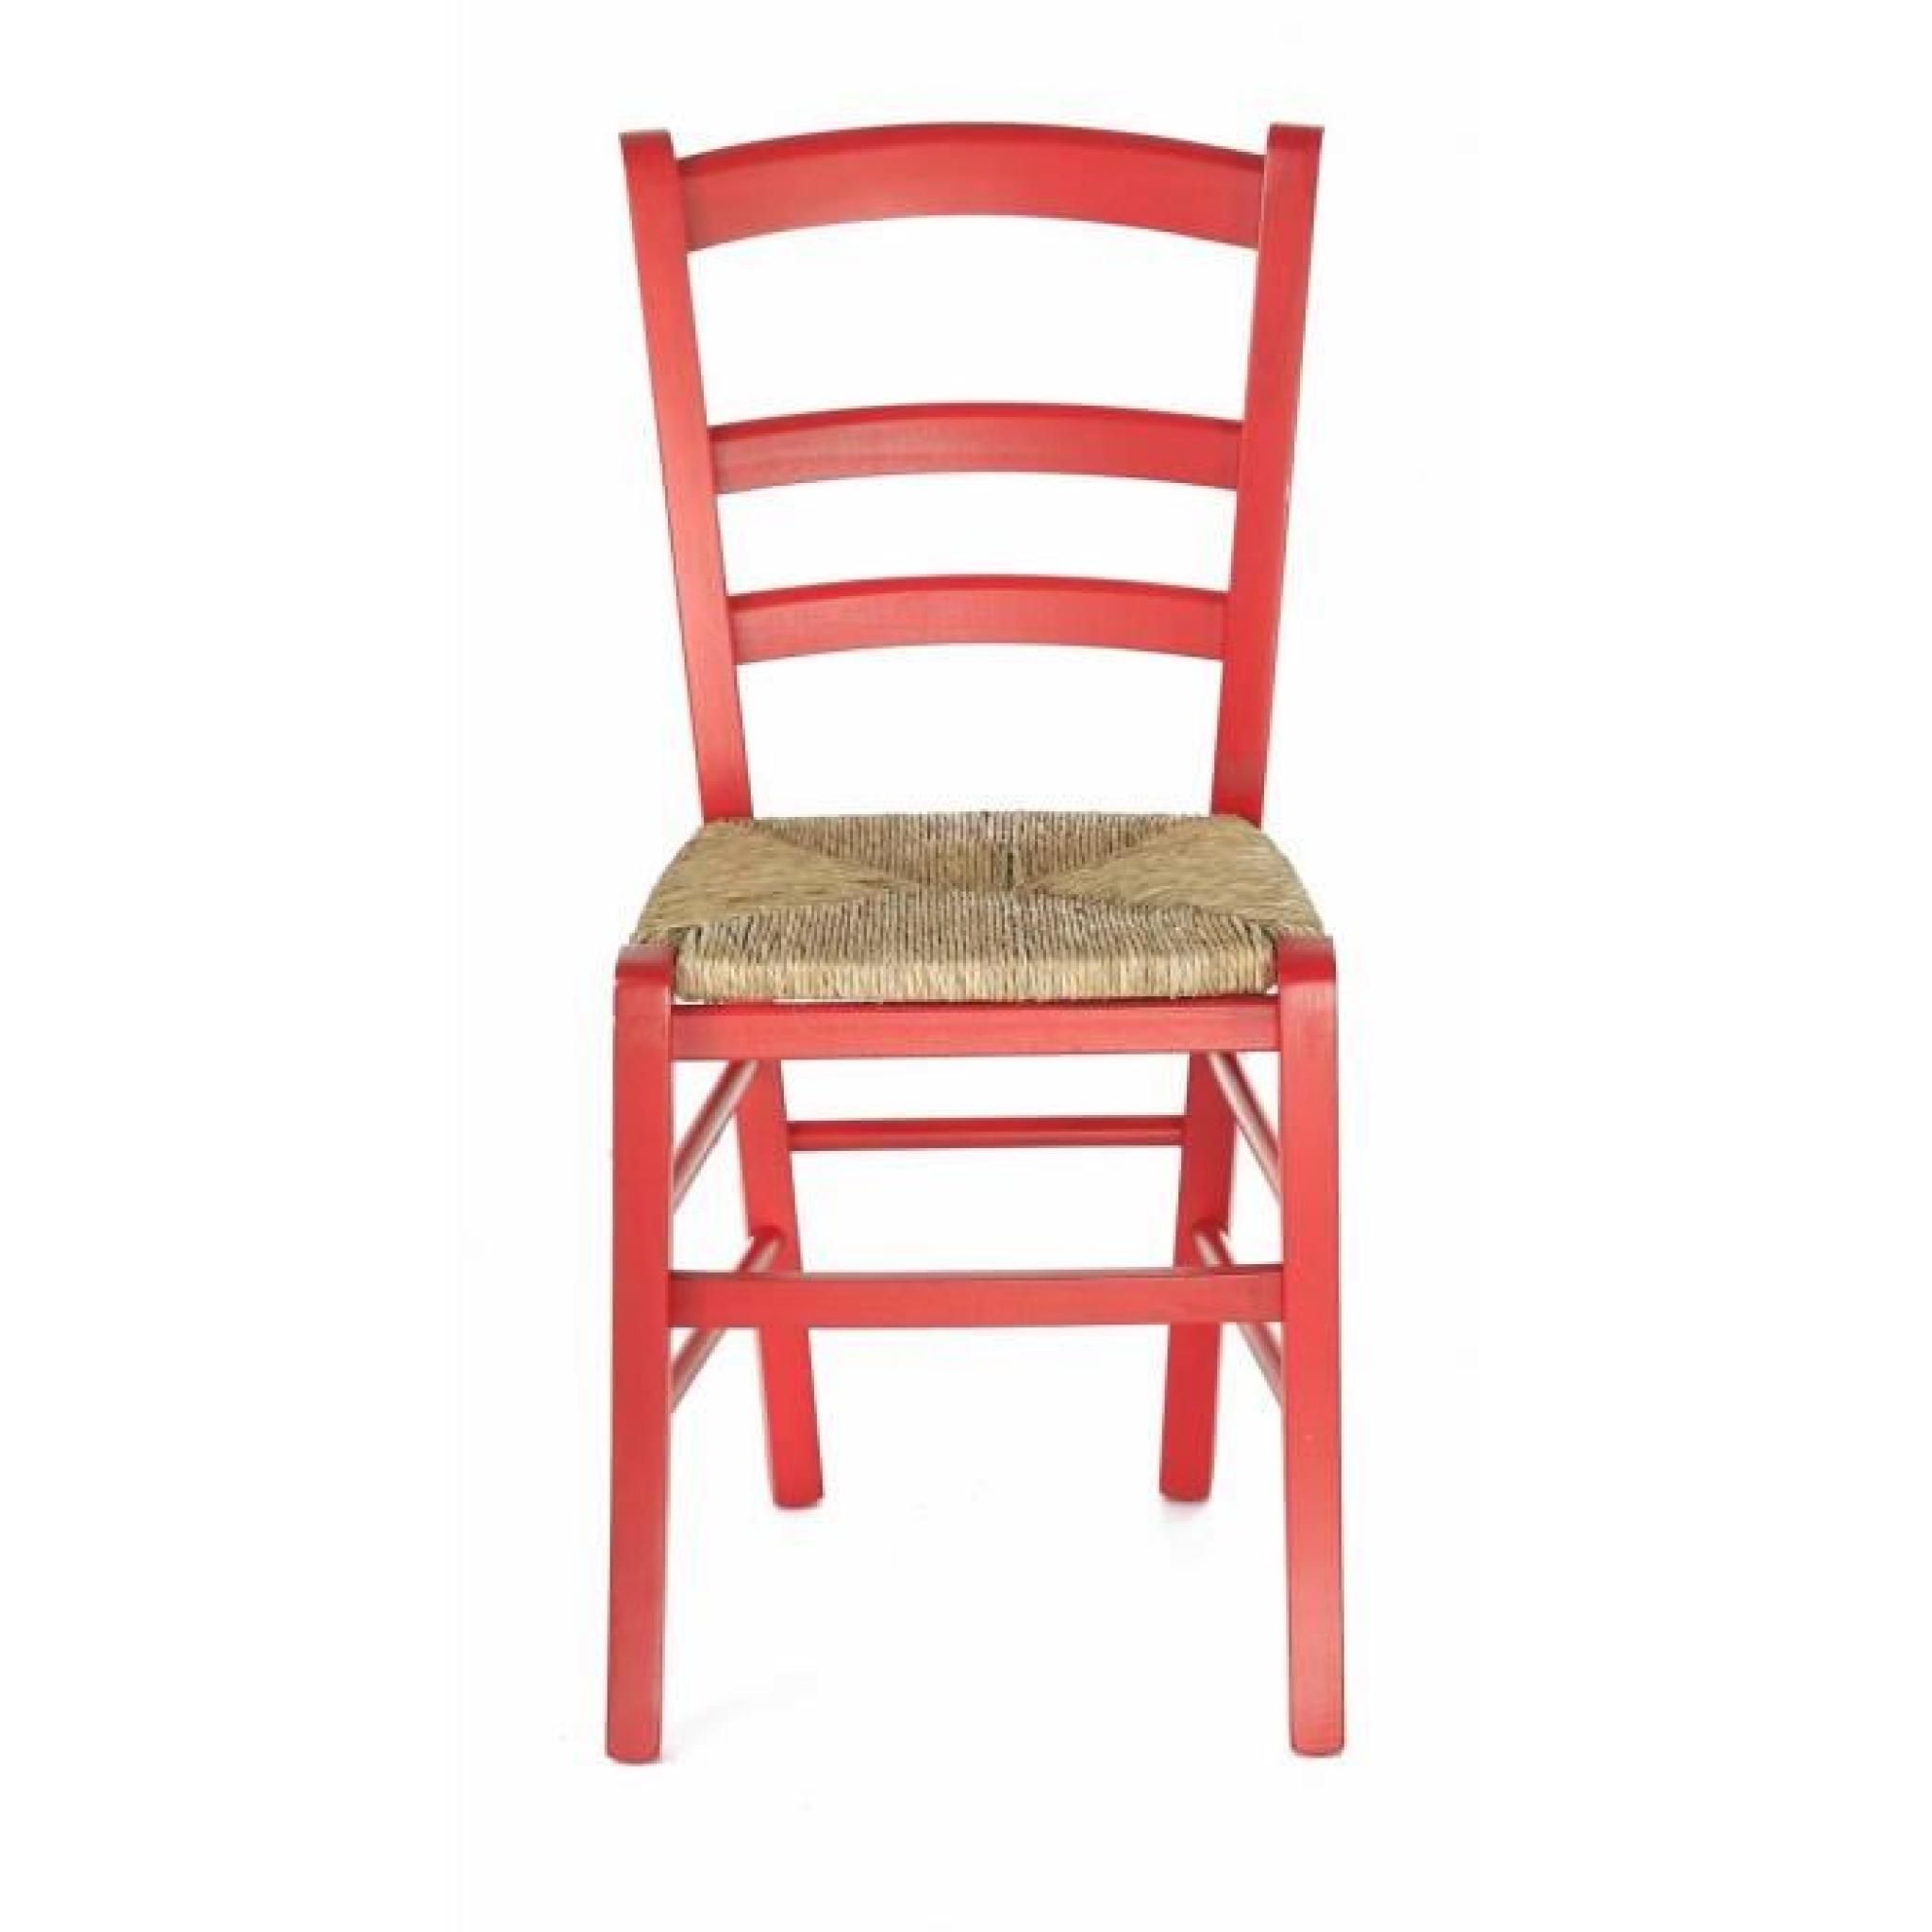 2 x Chaise hêtre massif rouge assise paille Sillingy - Pays